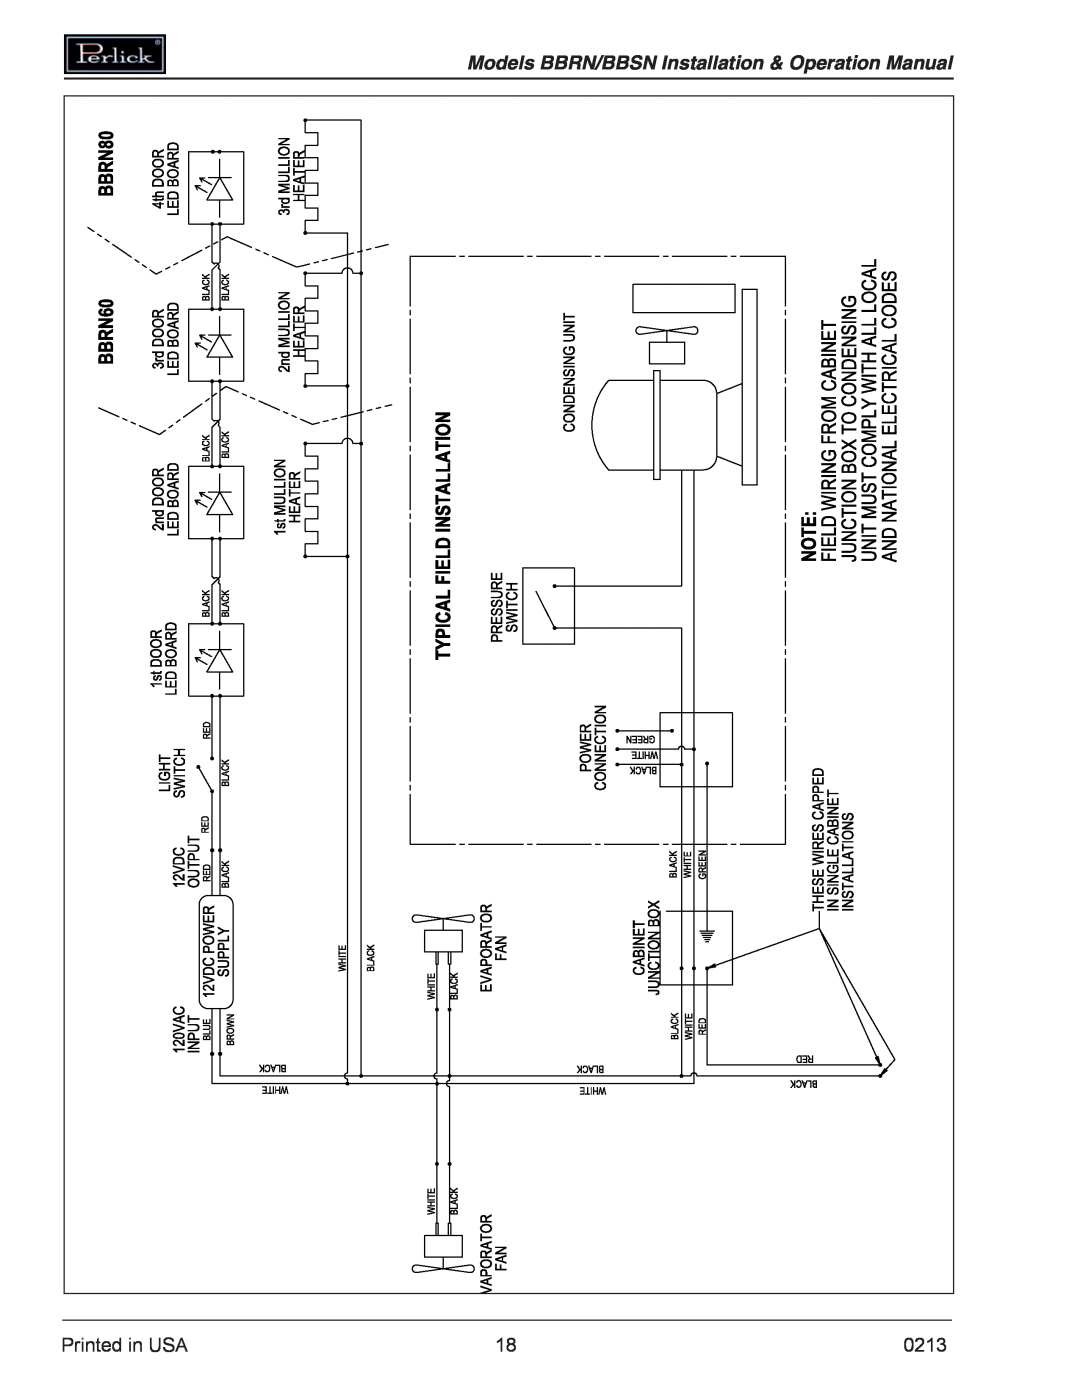 Perlick BBRN, BBSN operation manual Printed in USA, 0213 